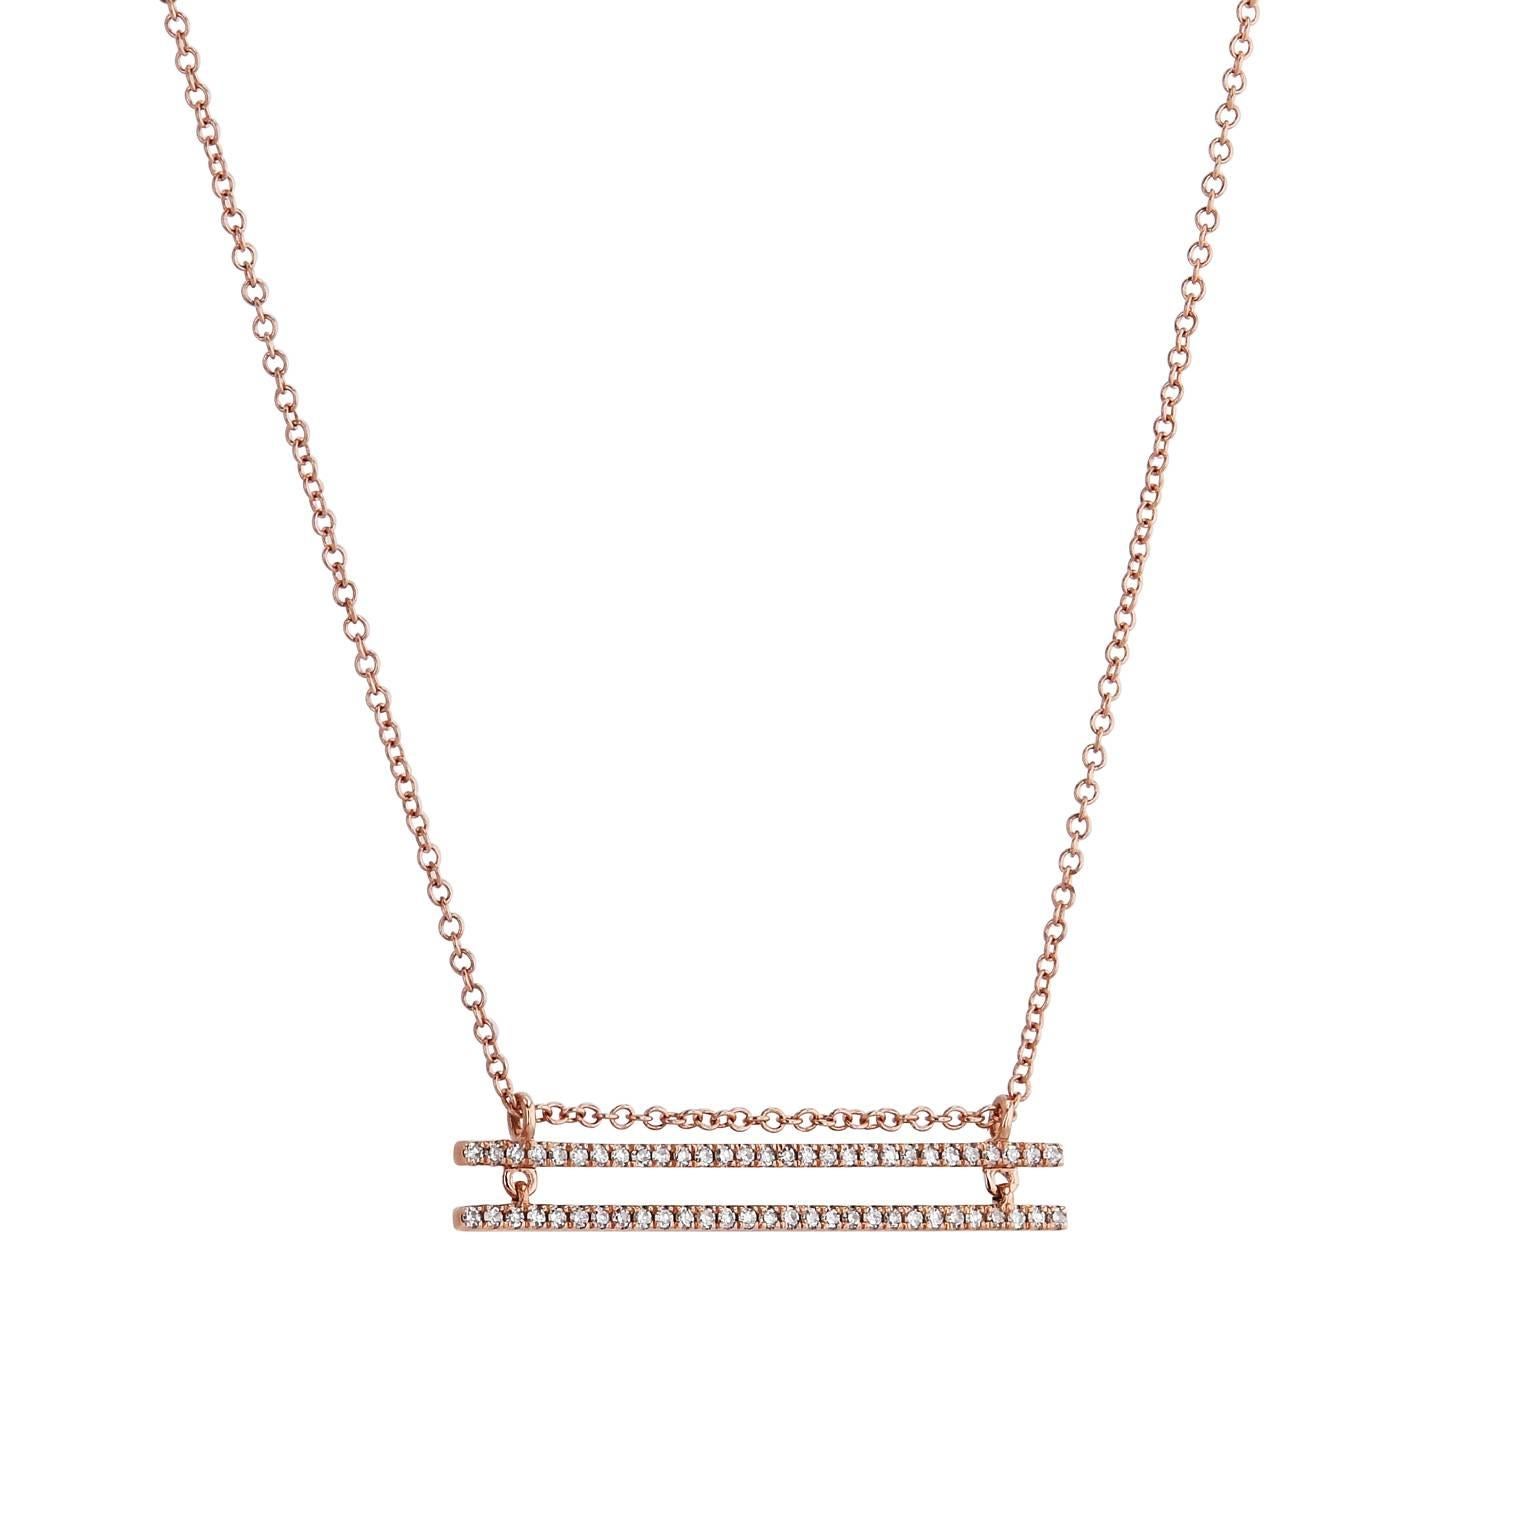 0.21 carat of pave set diamond adorn a 14 karat rose gold horizontal double bar on hinge in this pendant necklace.